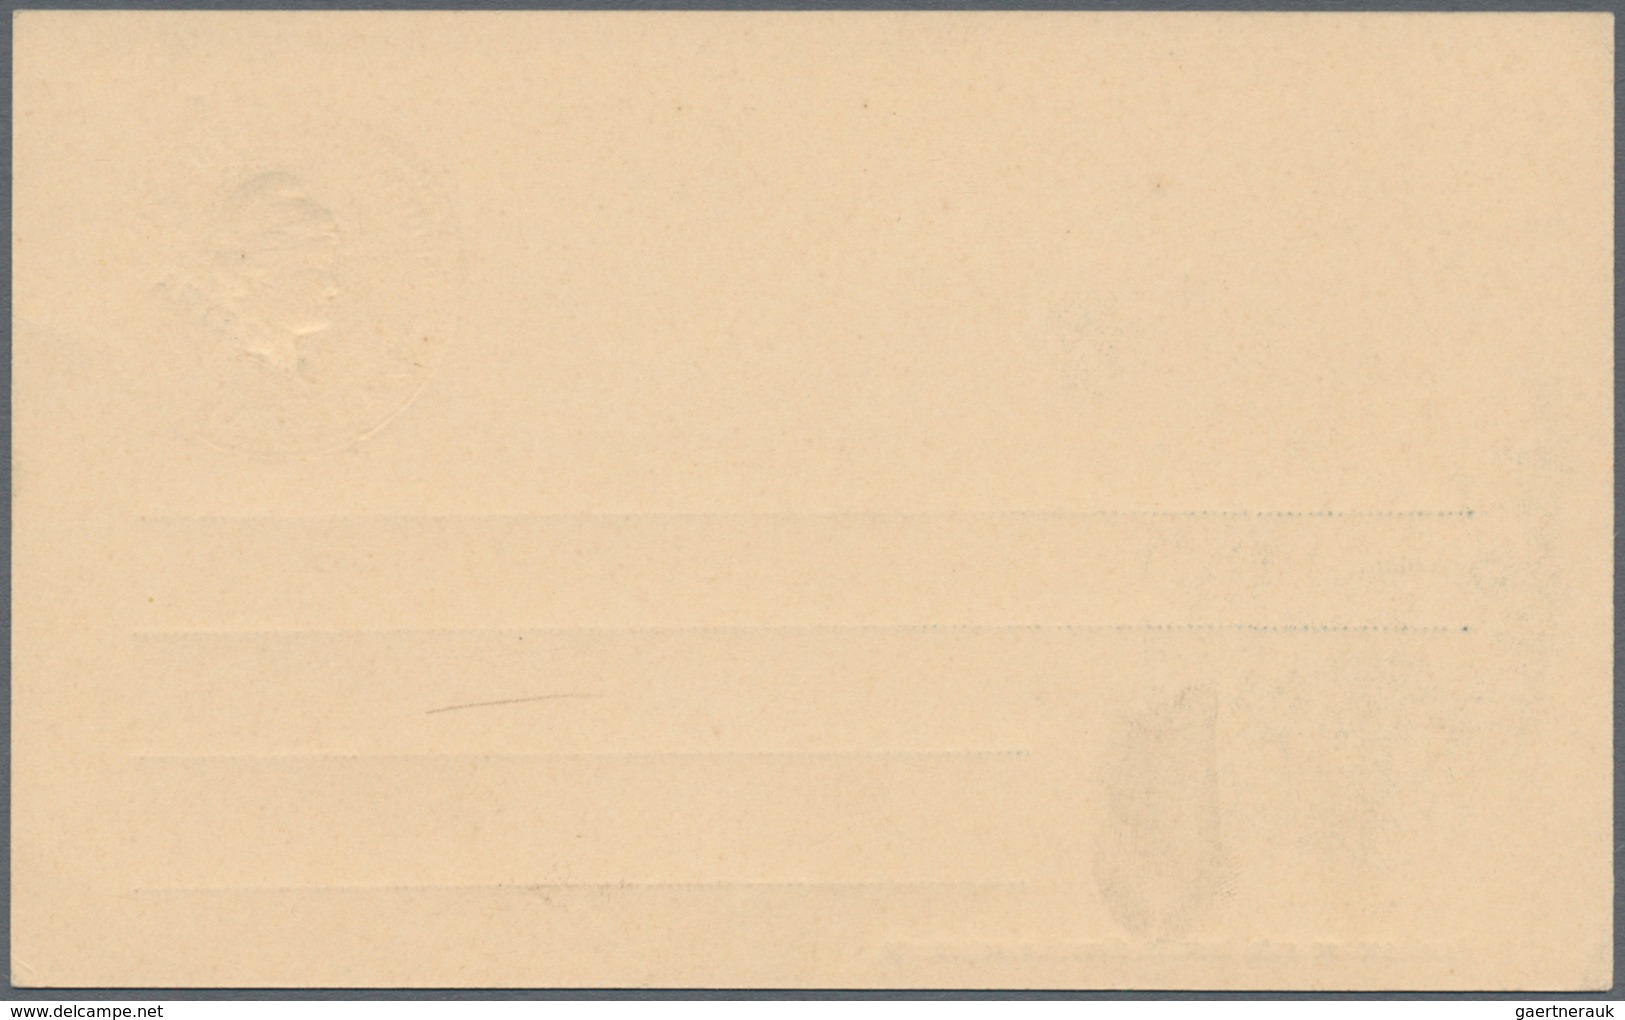 Argentinien - Ganzsachen: 1896, Liberty Issue Incl. Postcards 3c. Orange (2) And 6c. Violet And One - Ganzsachen